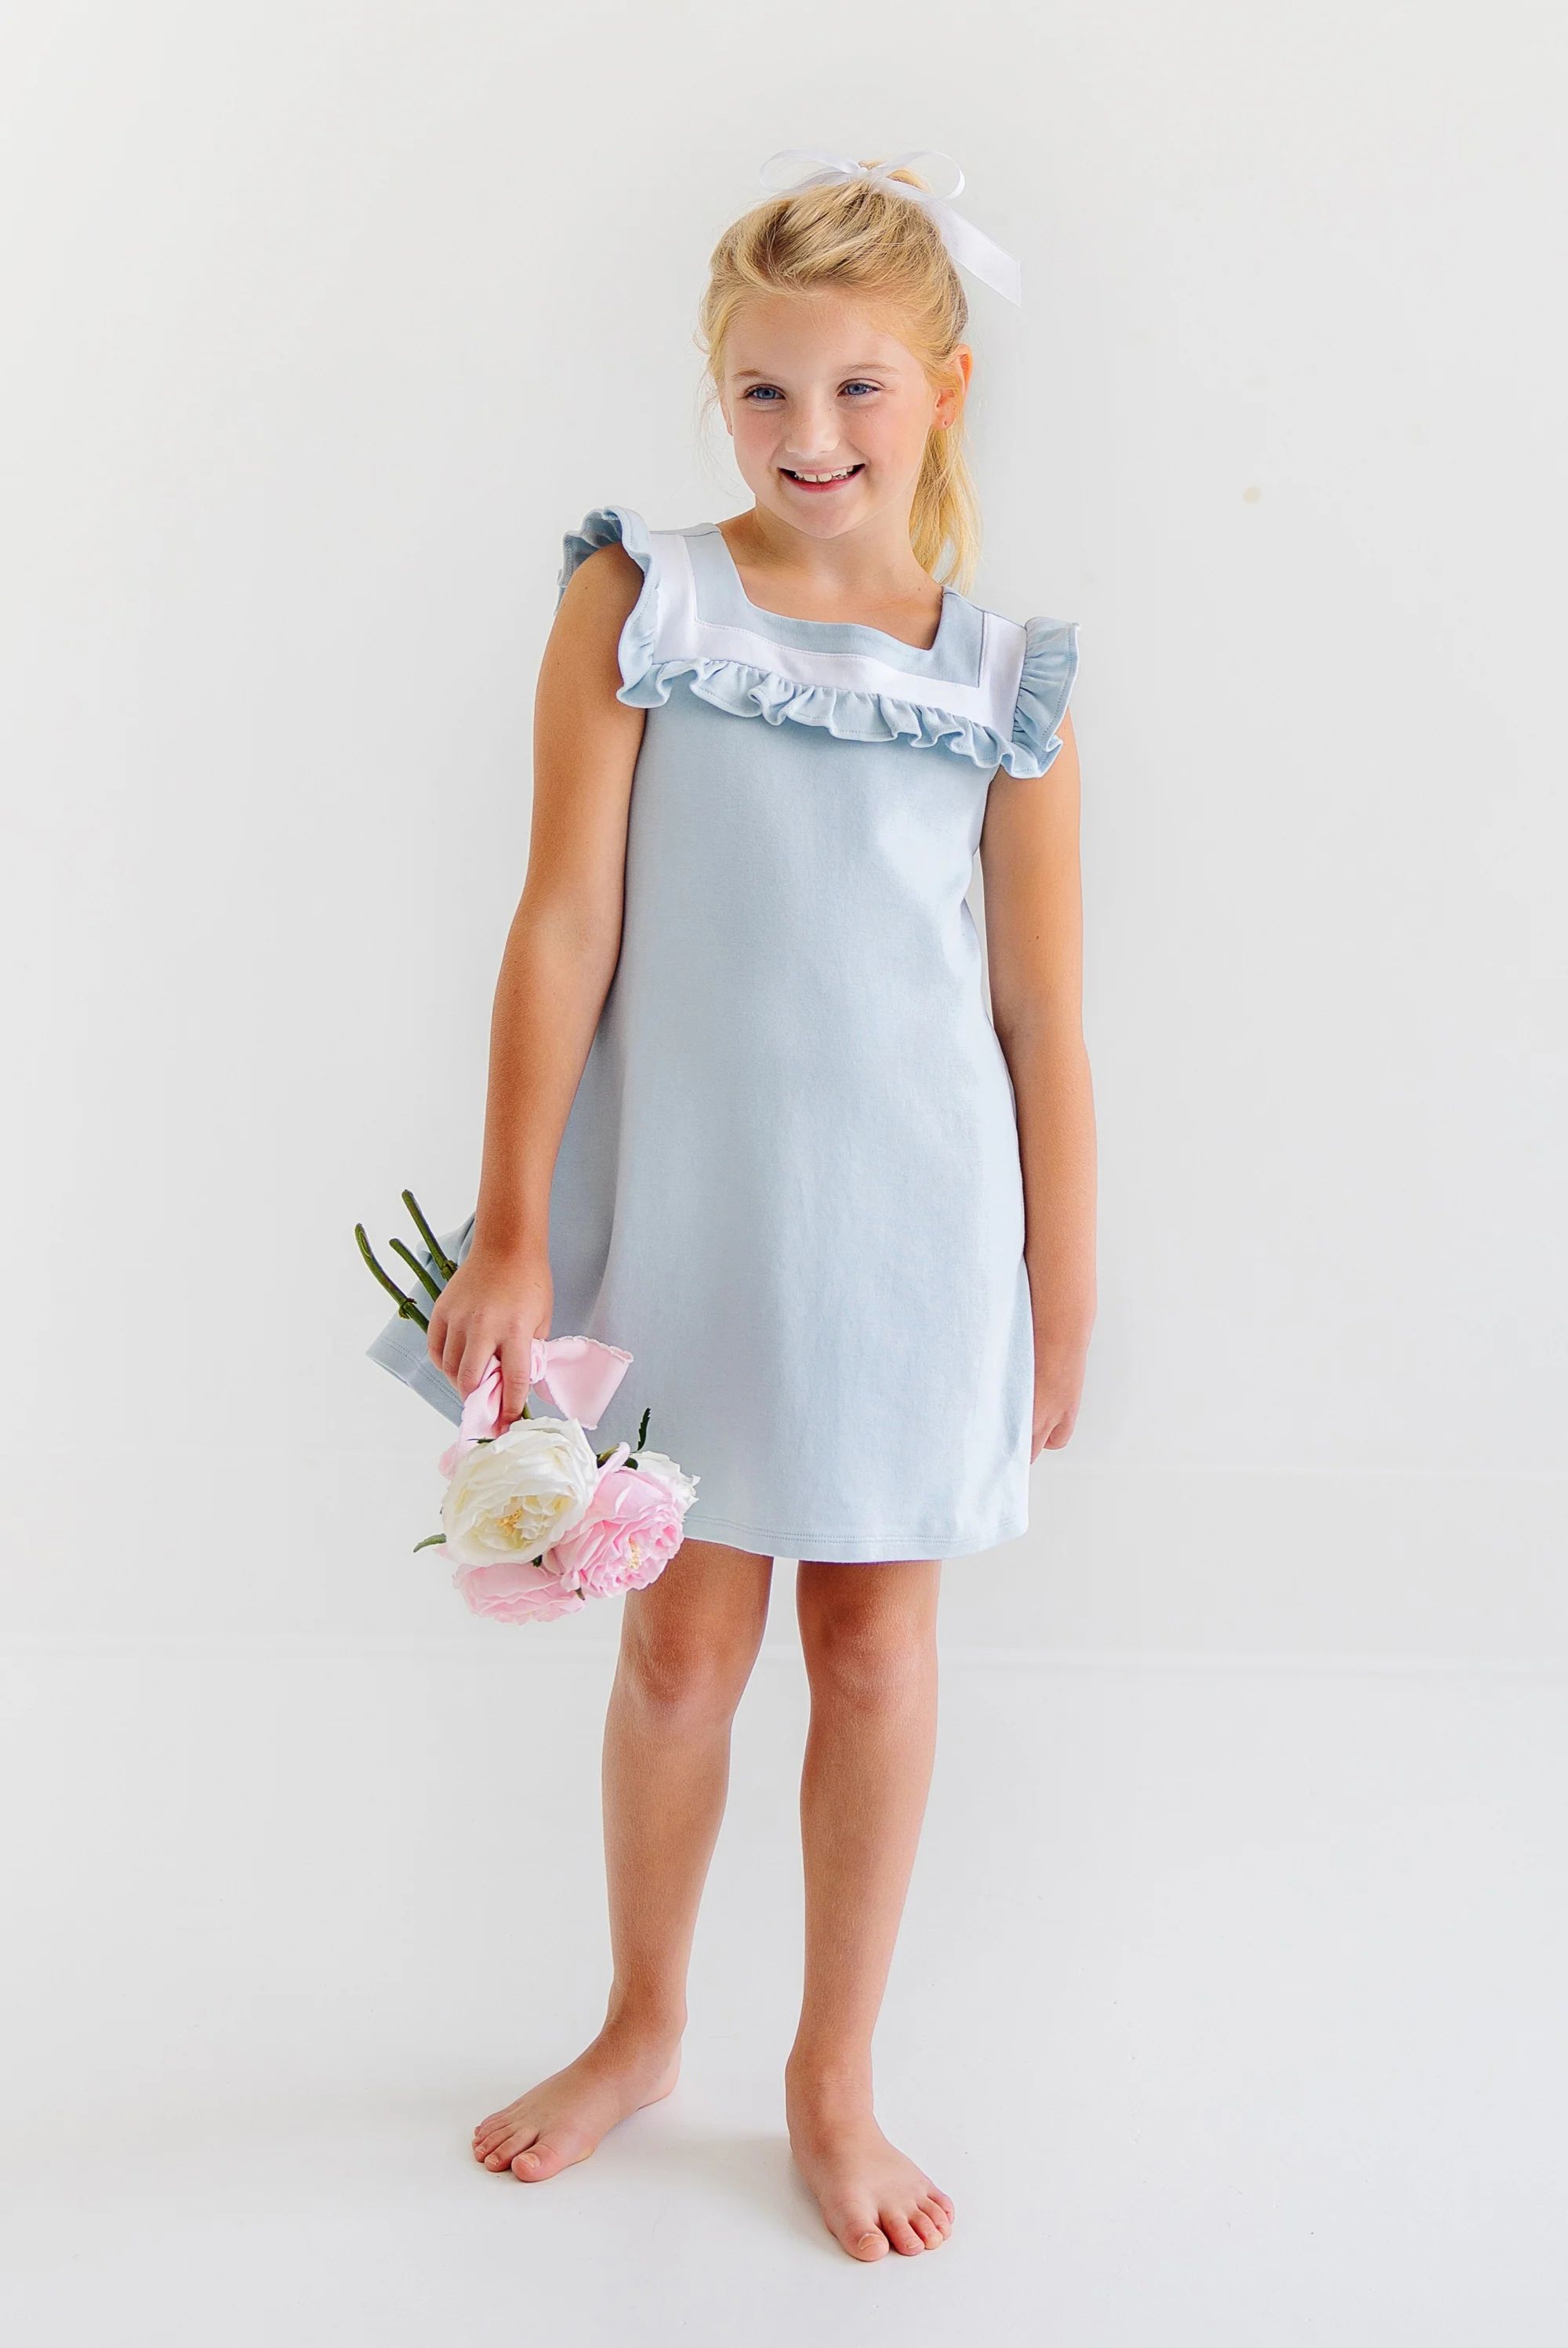 Darla Dress - Buckhead Blue with Worth Avenue White | The Beaufort Bonnet Company